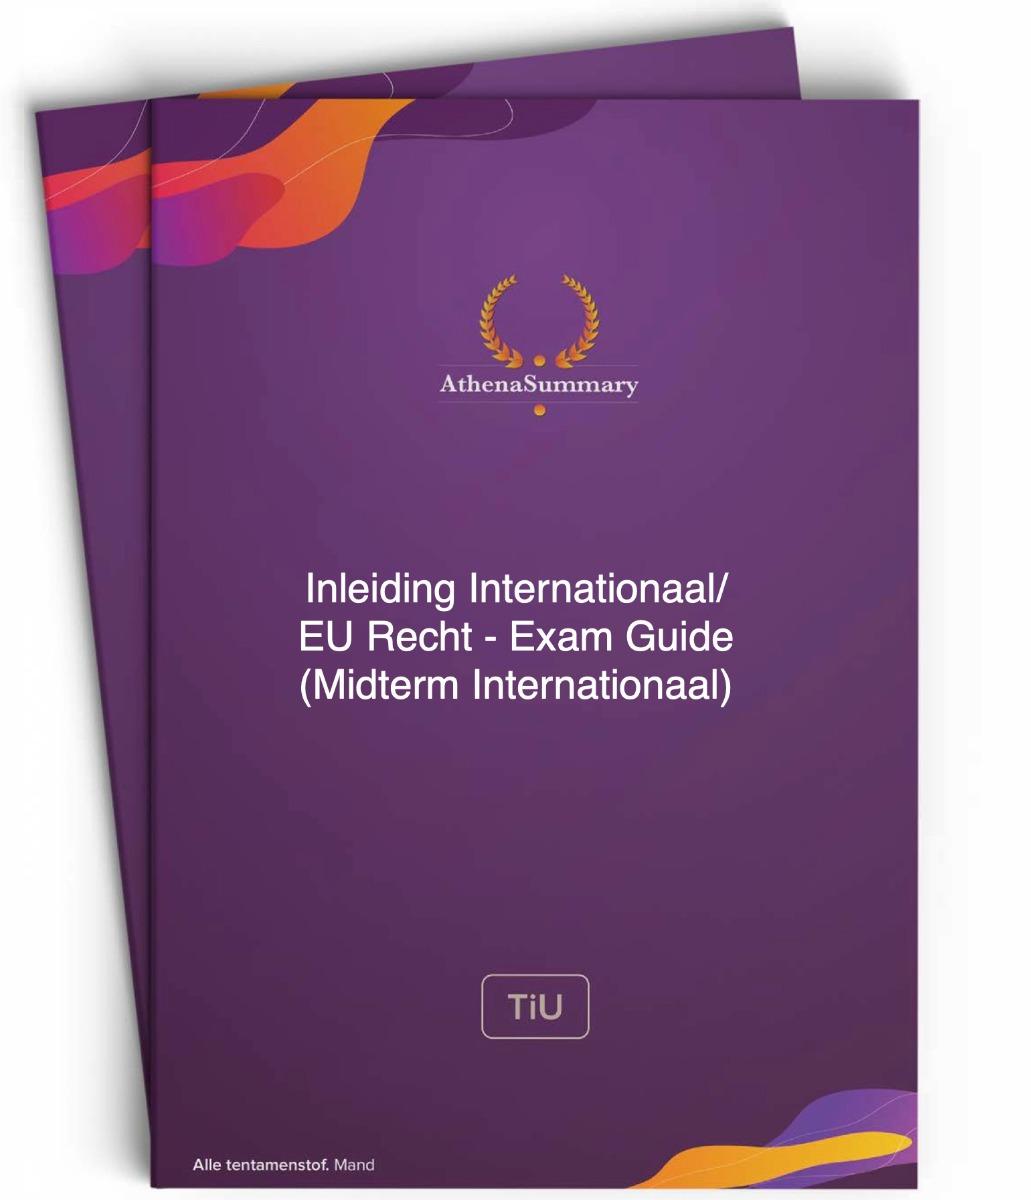 Exam Guide - Inleiding Internationaal/EU Recht (Midterm - Internationaal deel) 